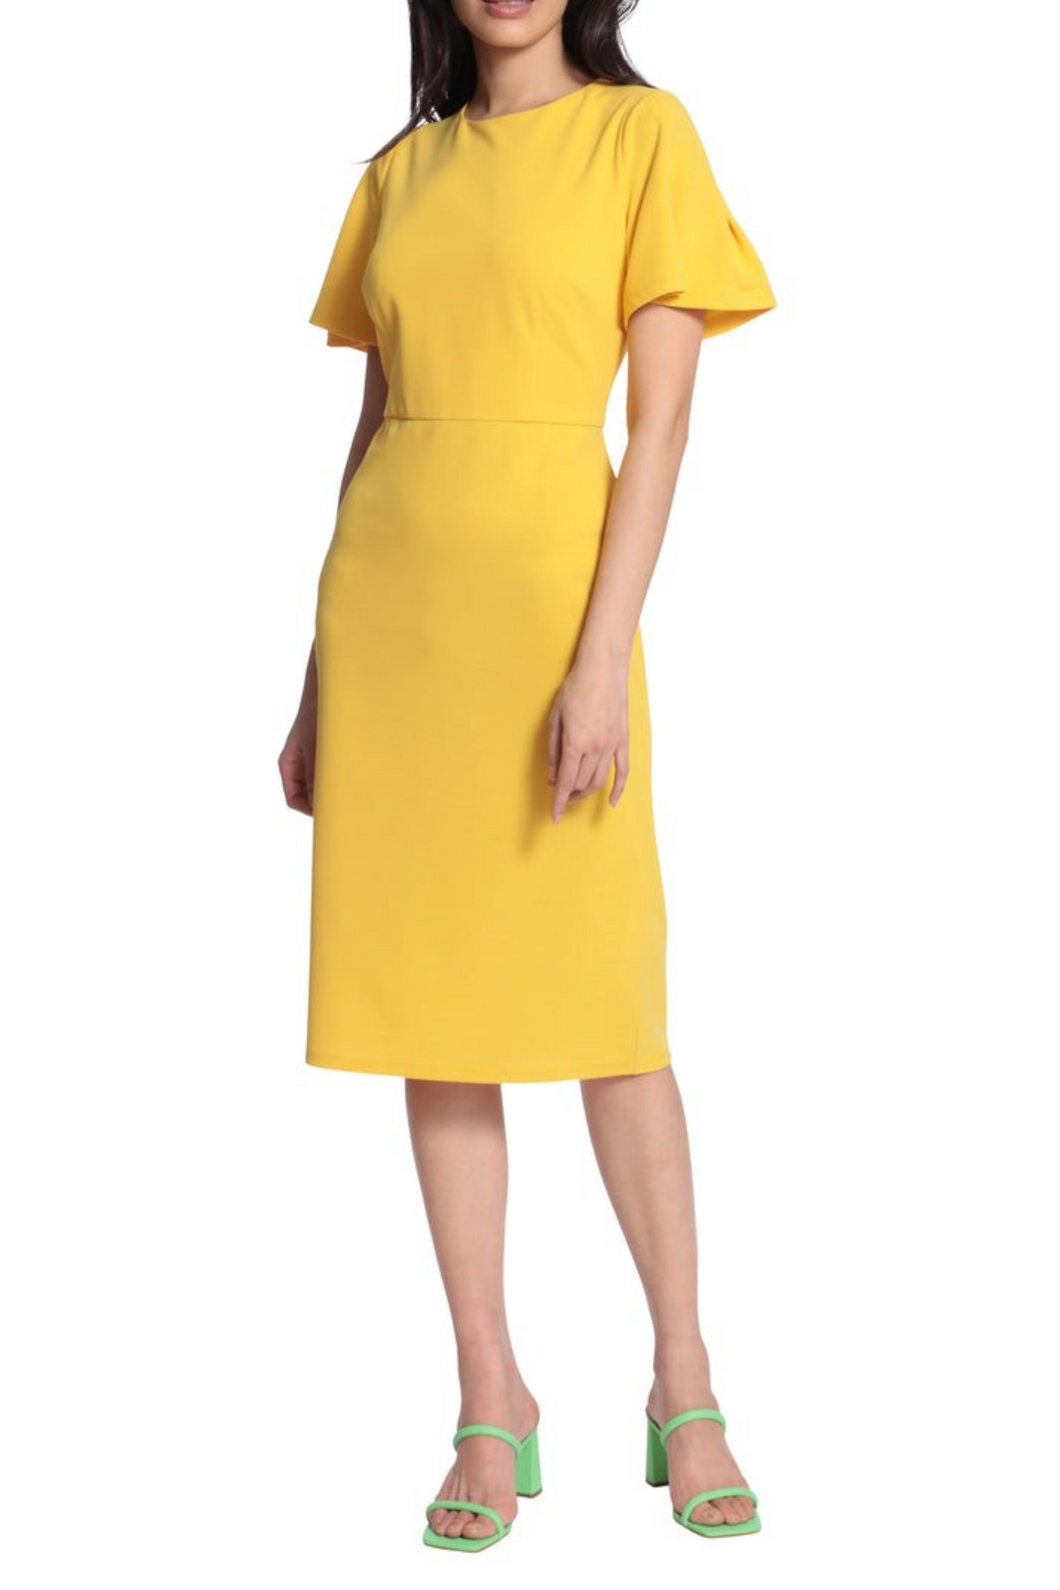 Maggy London Yolk Yellow Short Sleeve Sheath Midi Dress